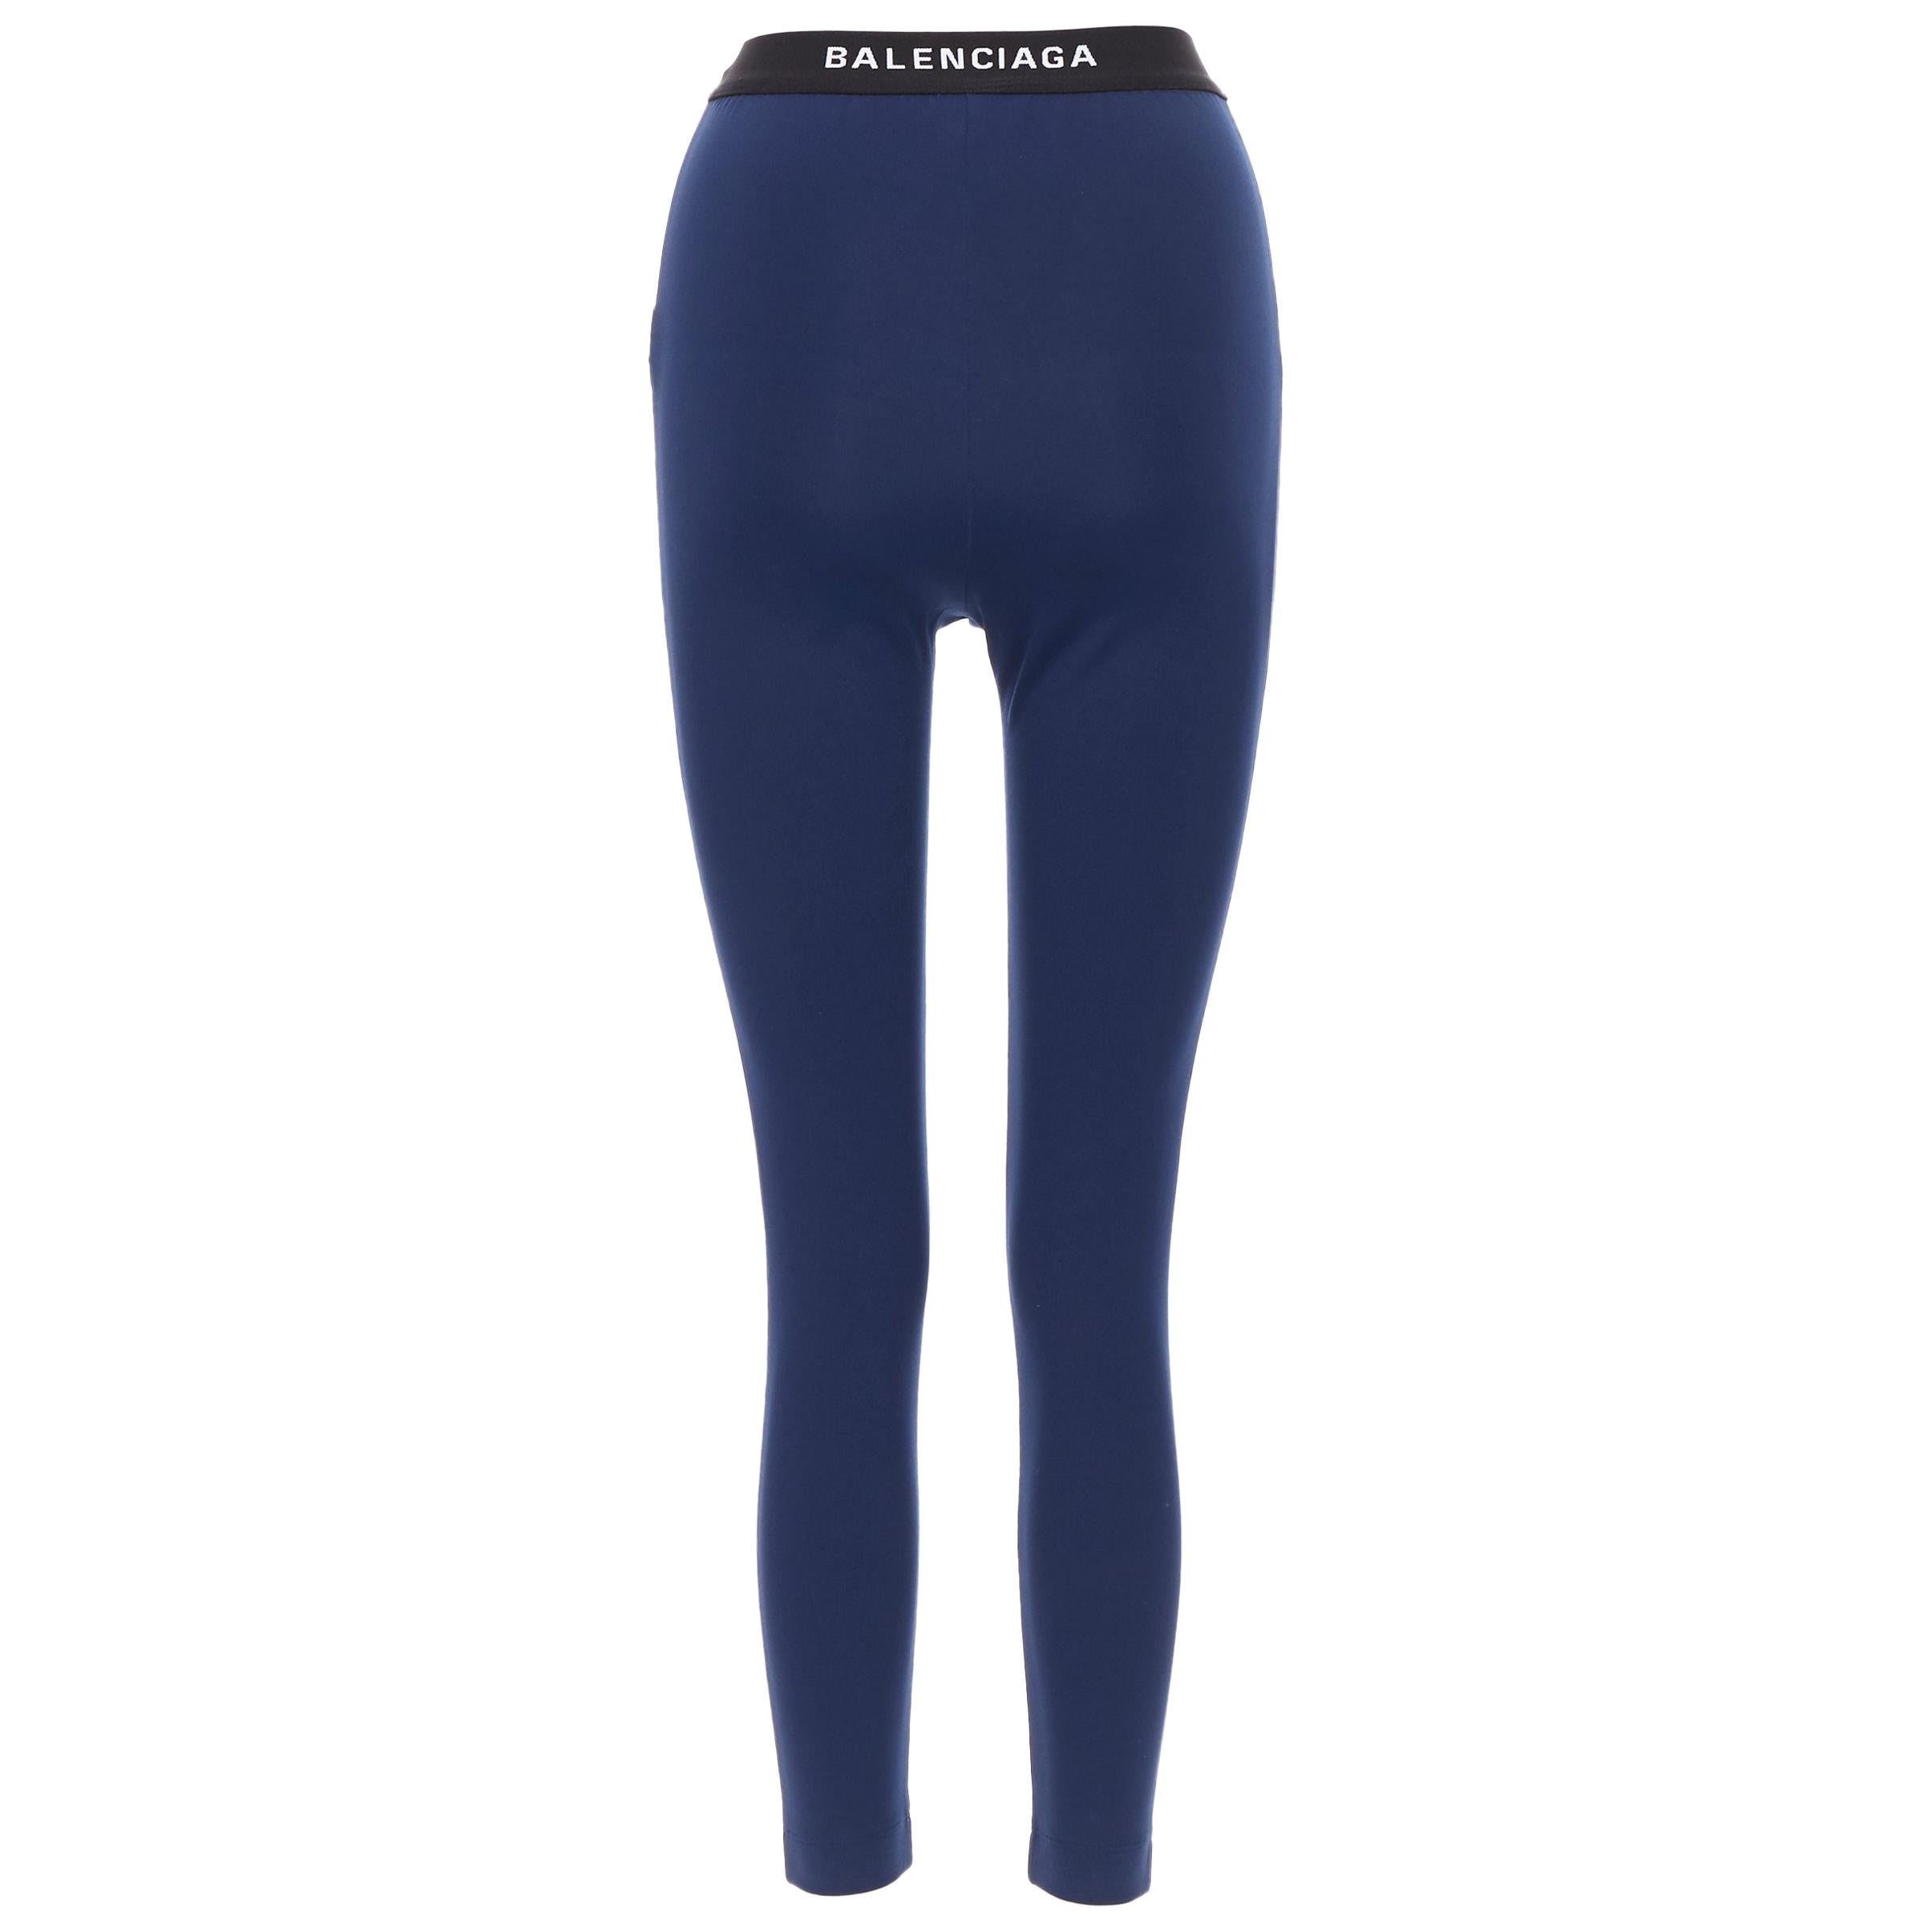 BALENCIAGA DEMNA dark blue front seam logo band dual szip legging pants FR34